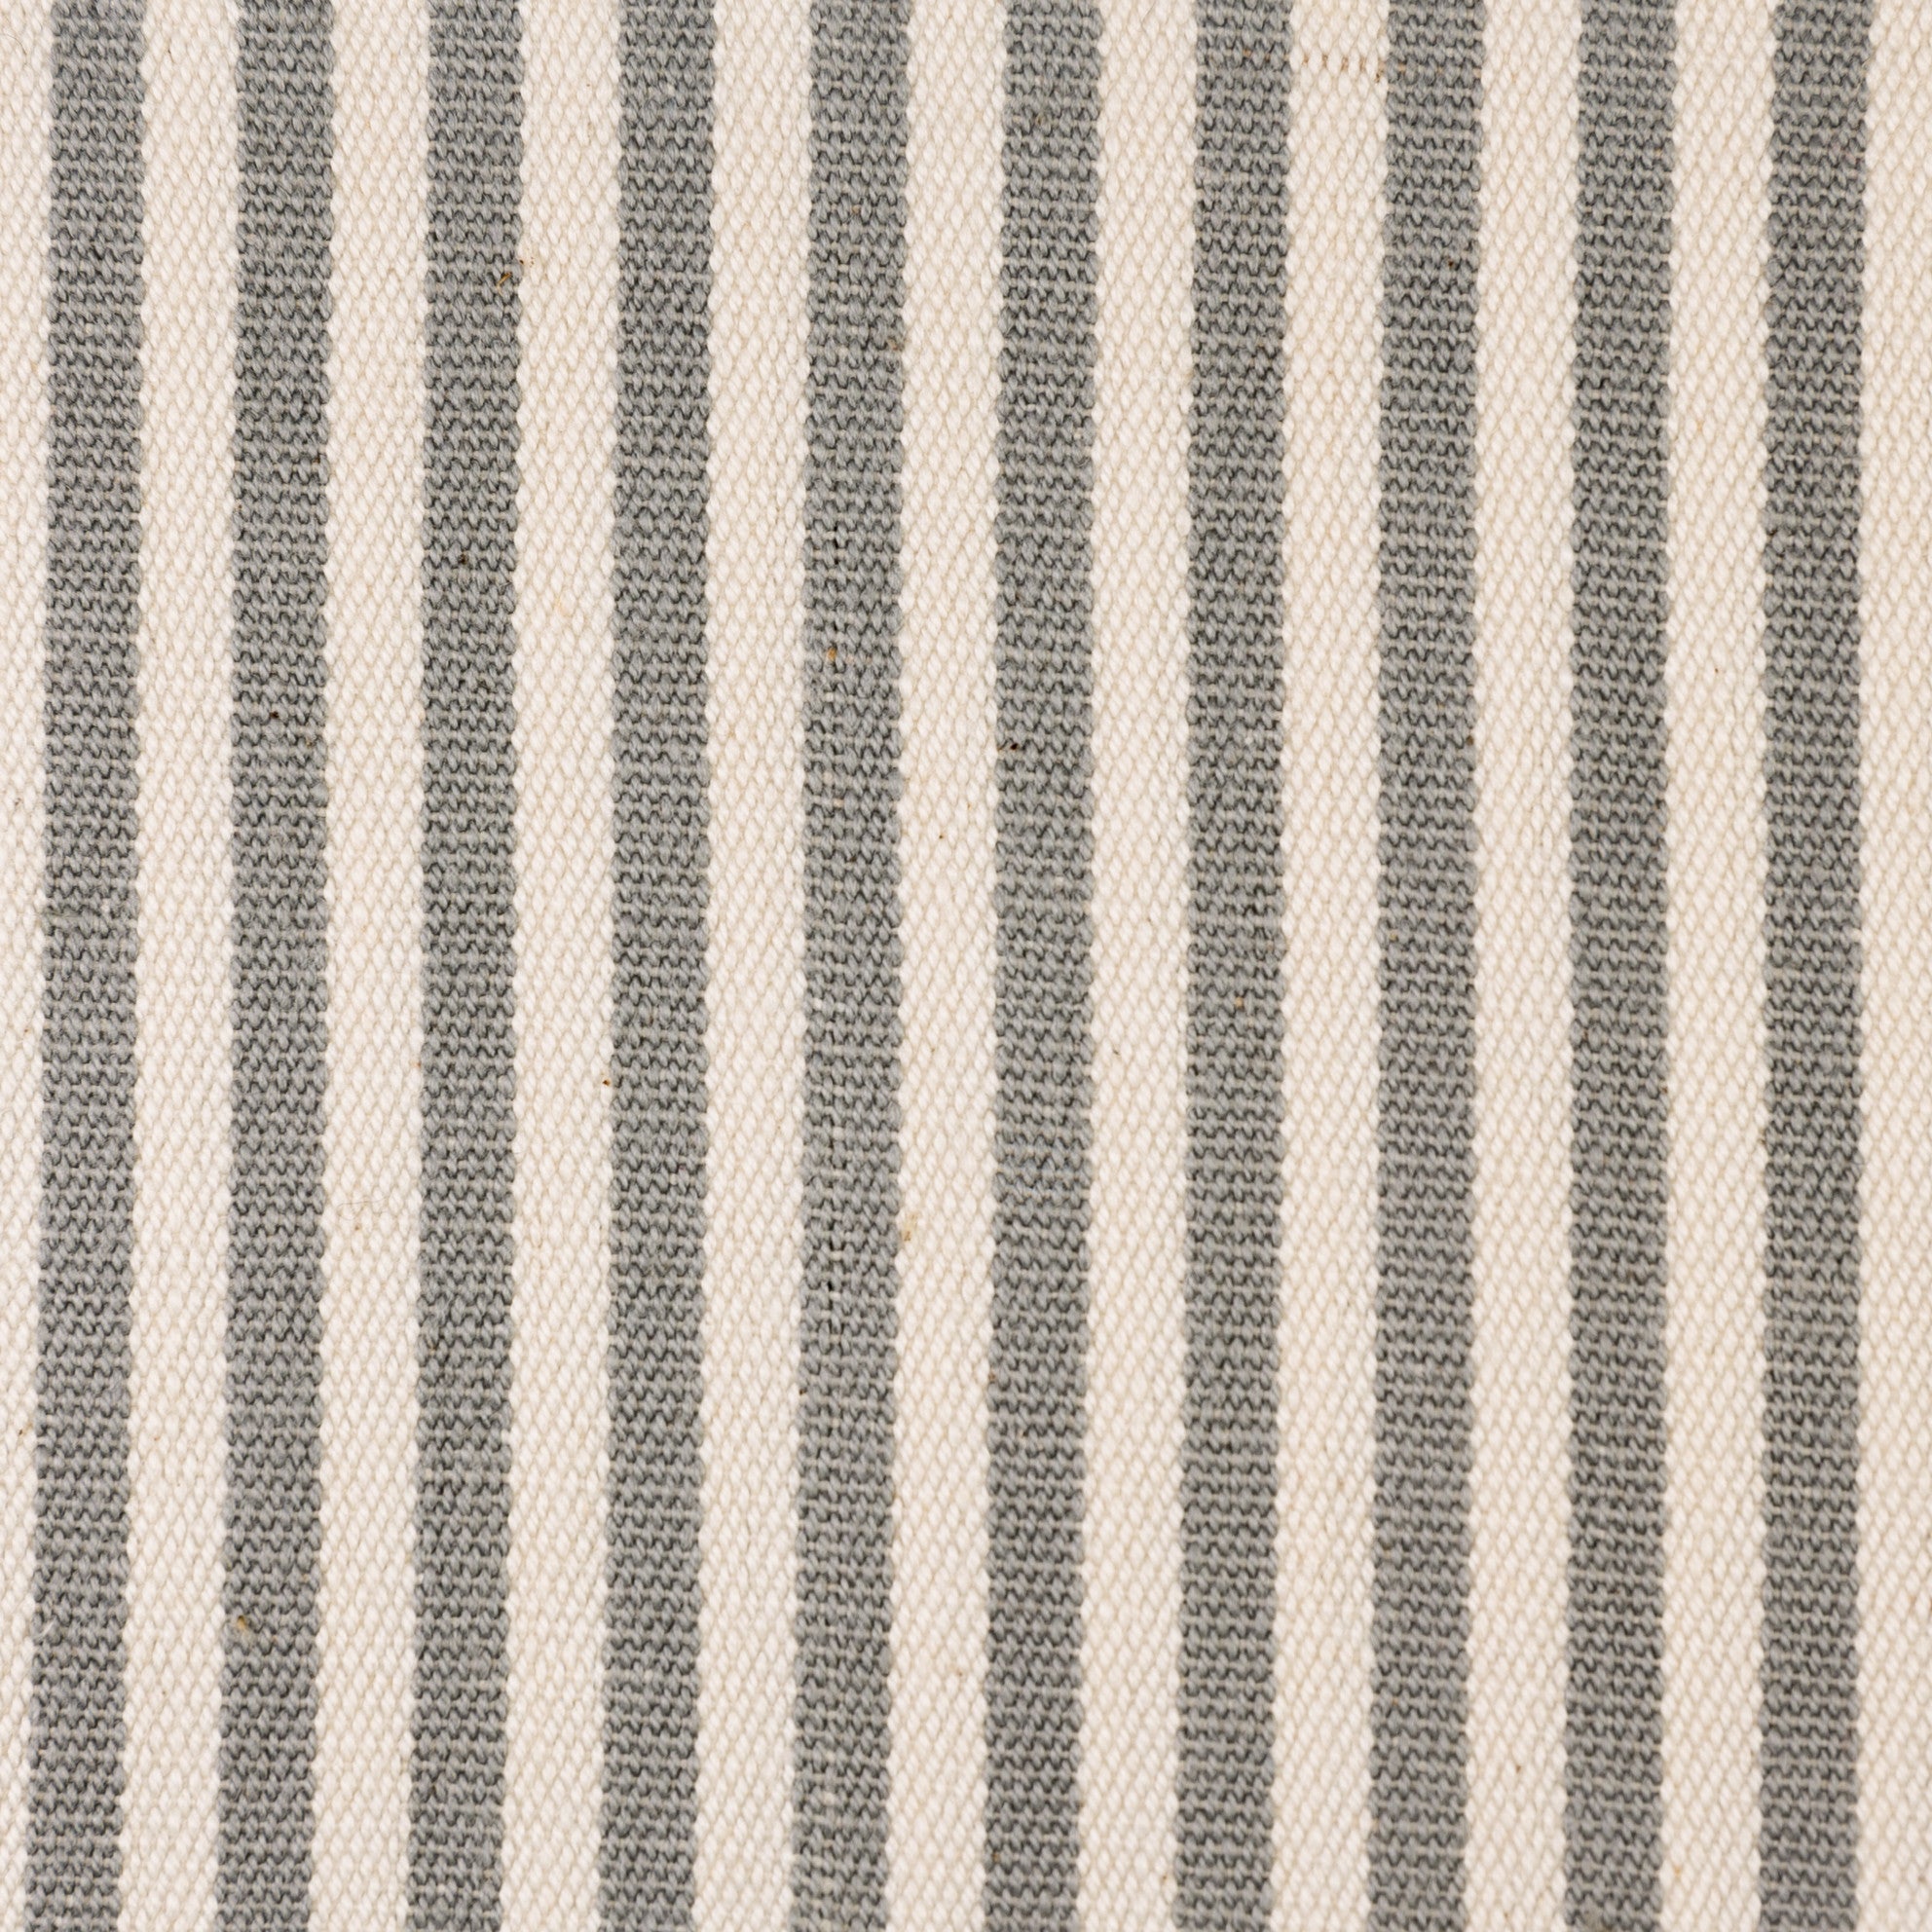 Woven Striped Fabric - Bude 02/024 Herring Gull | Nicholas Engert Interiors